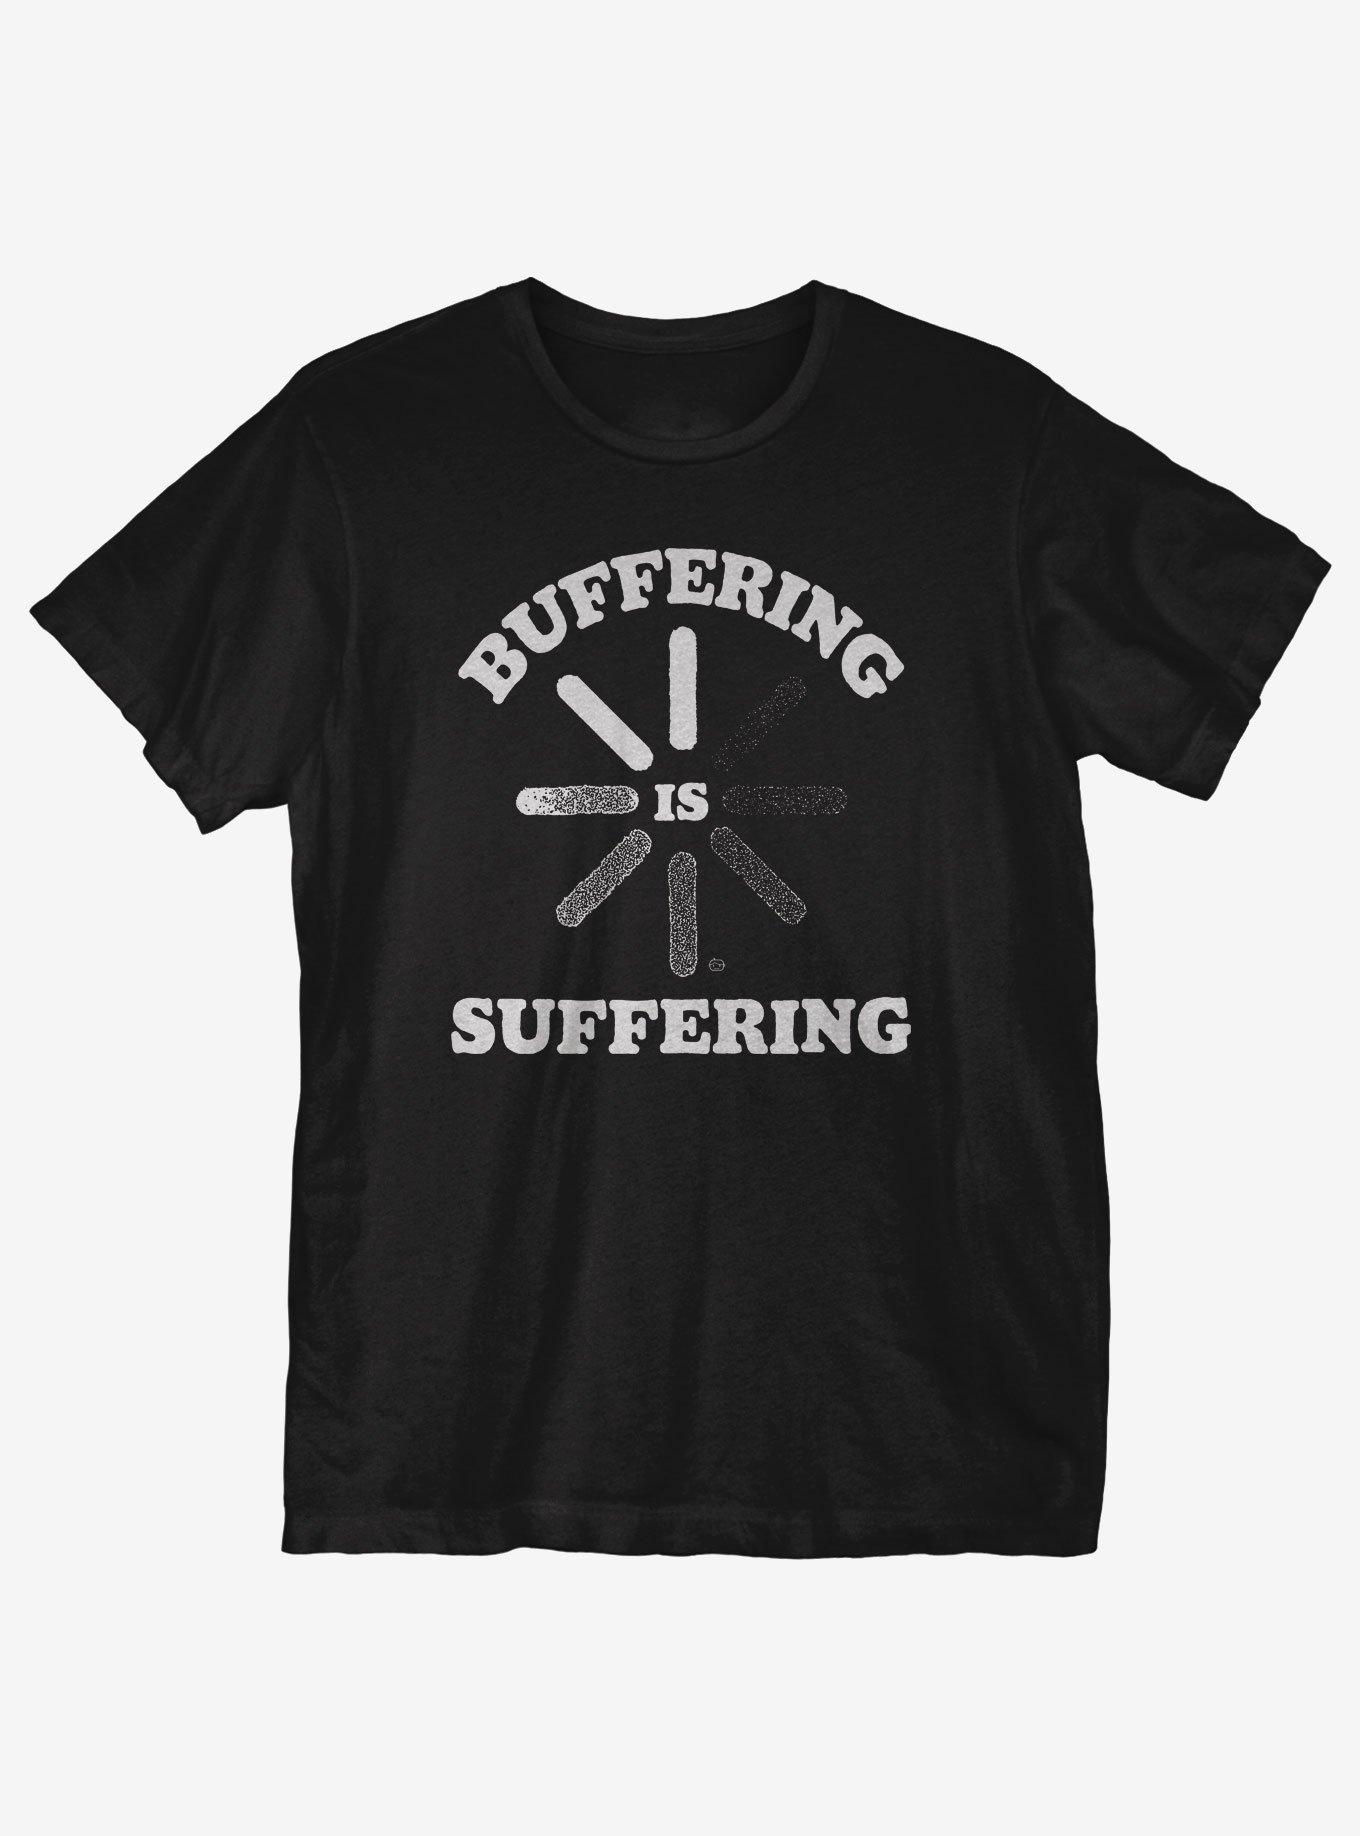 Buffering is Suffering T-Shirt